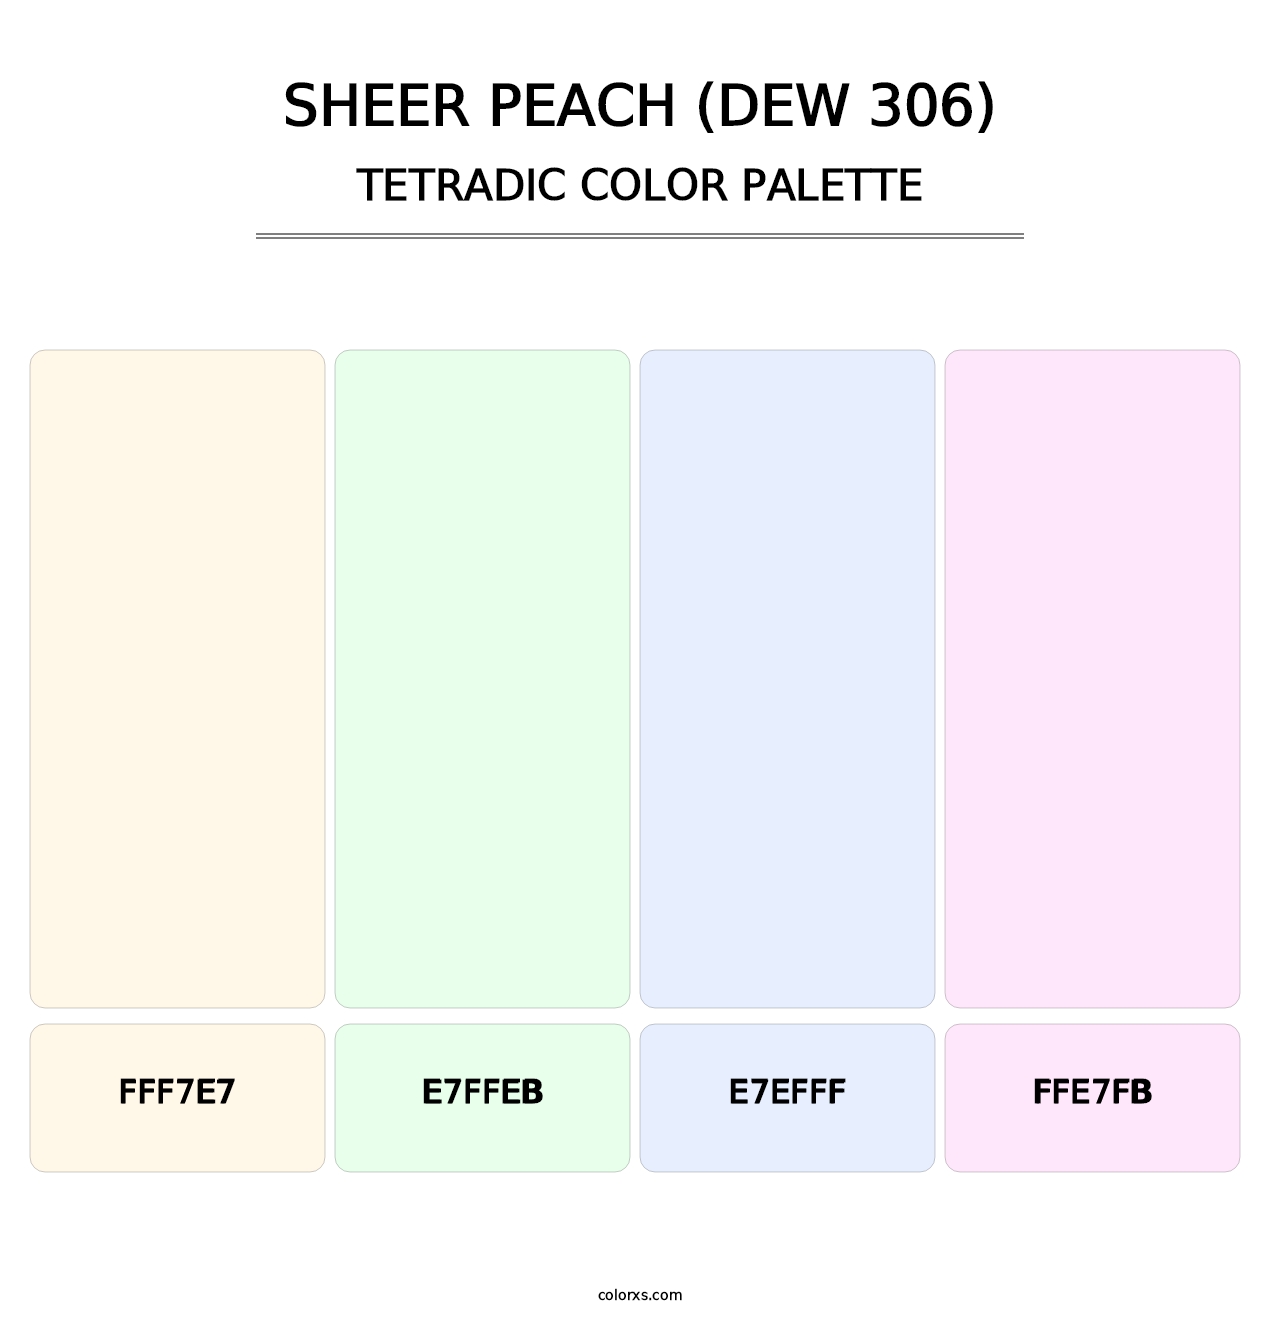 Sheer Peach (DEW 306) - Tetradic Color Palette